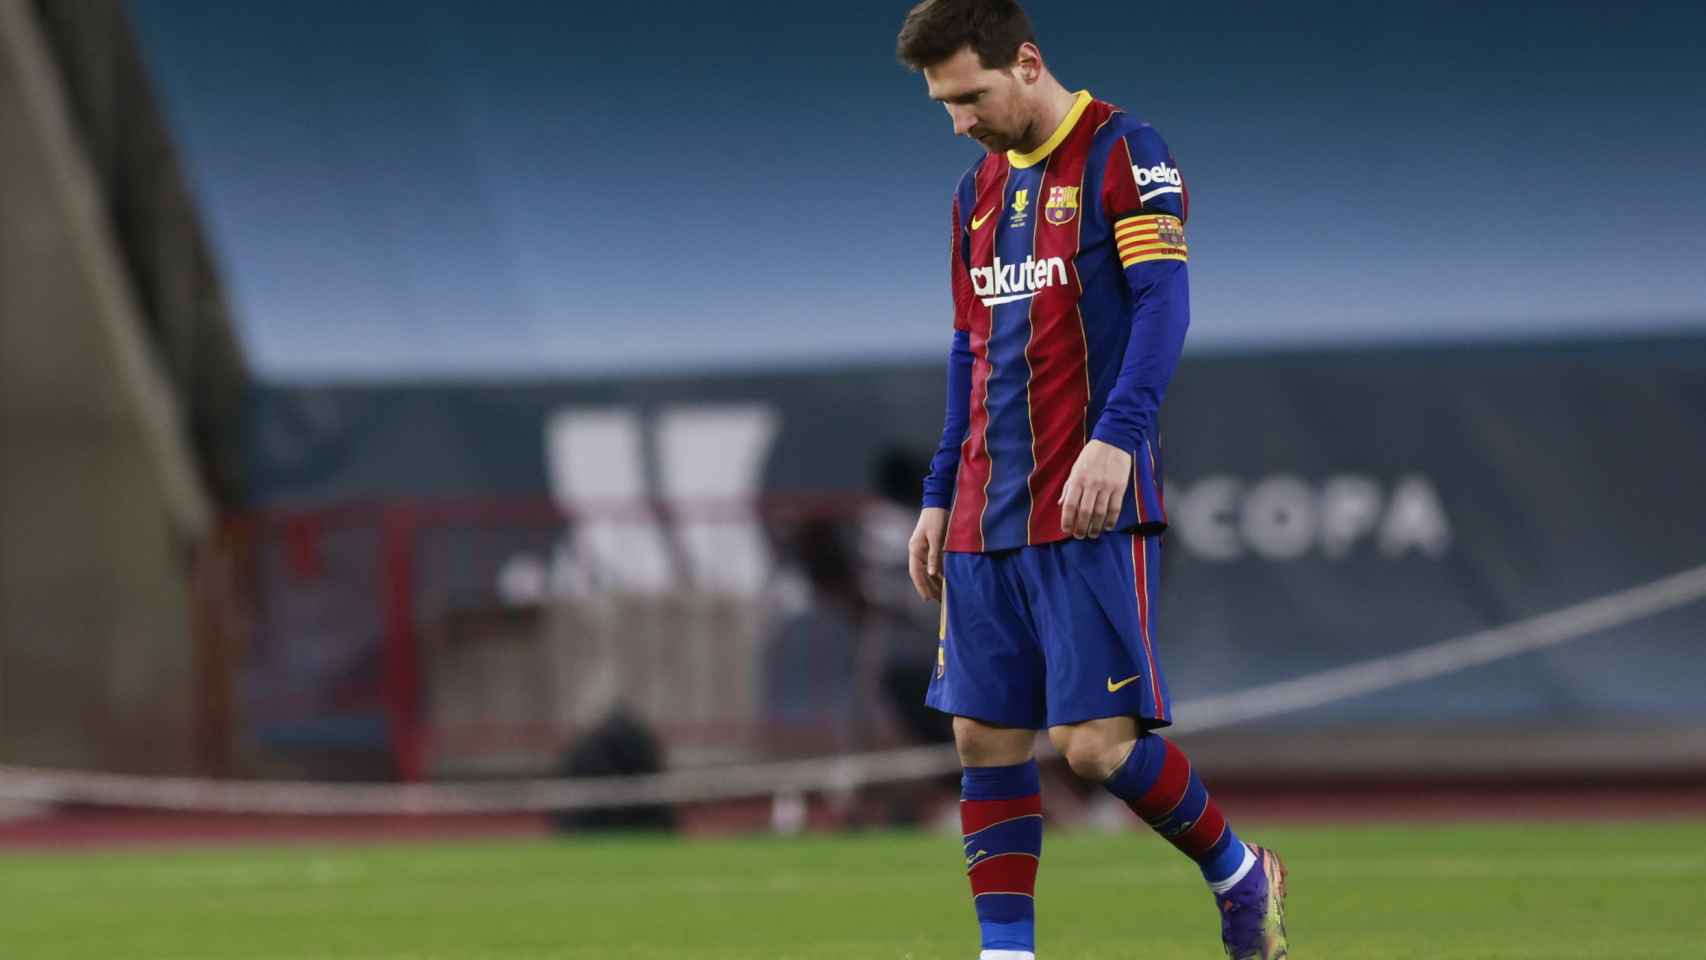 La cara de Leo Messi tras el gol de Villalibre en la final de la Supercopa de España